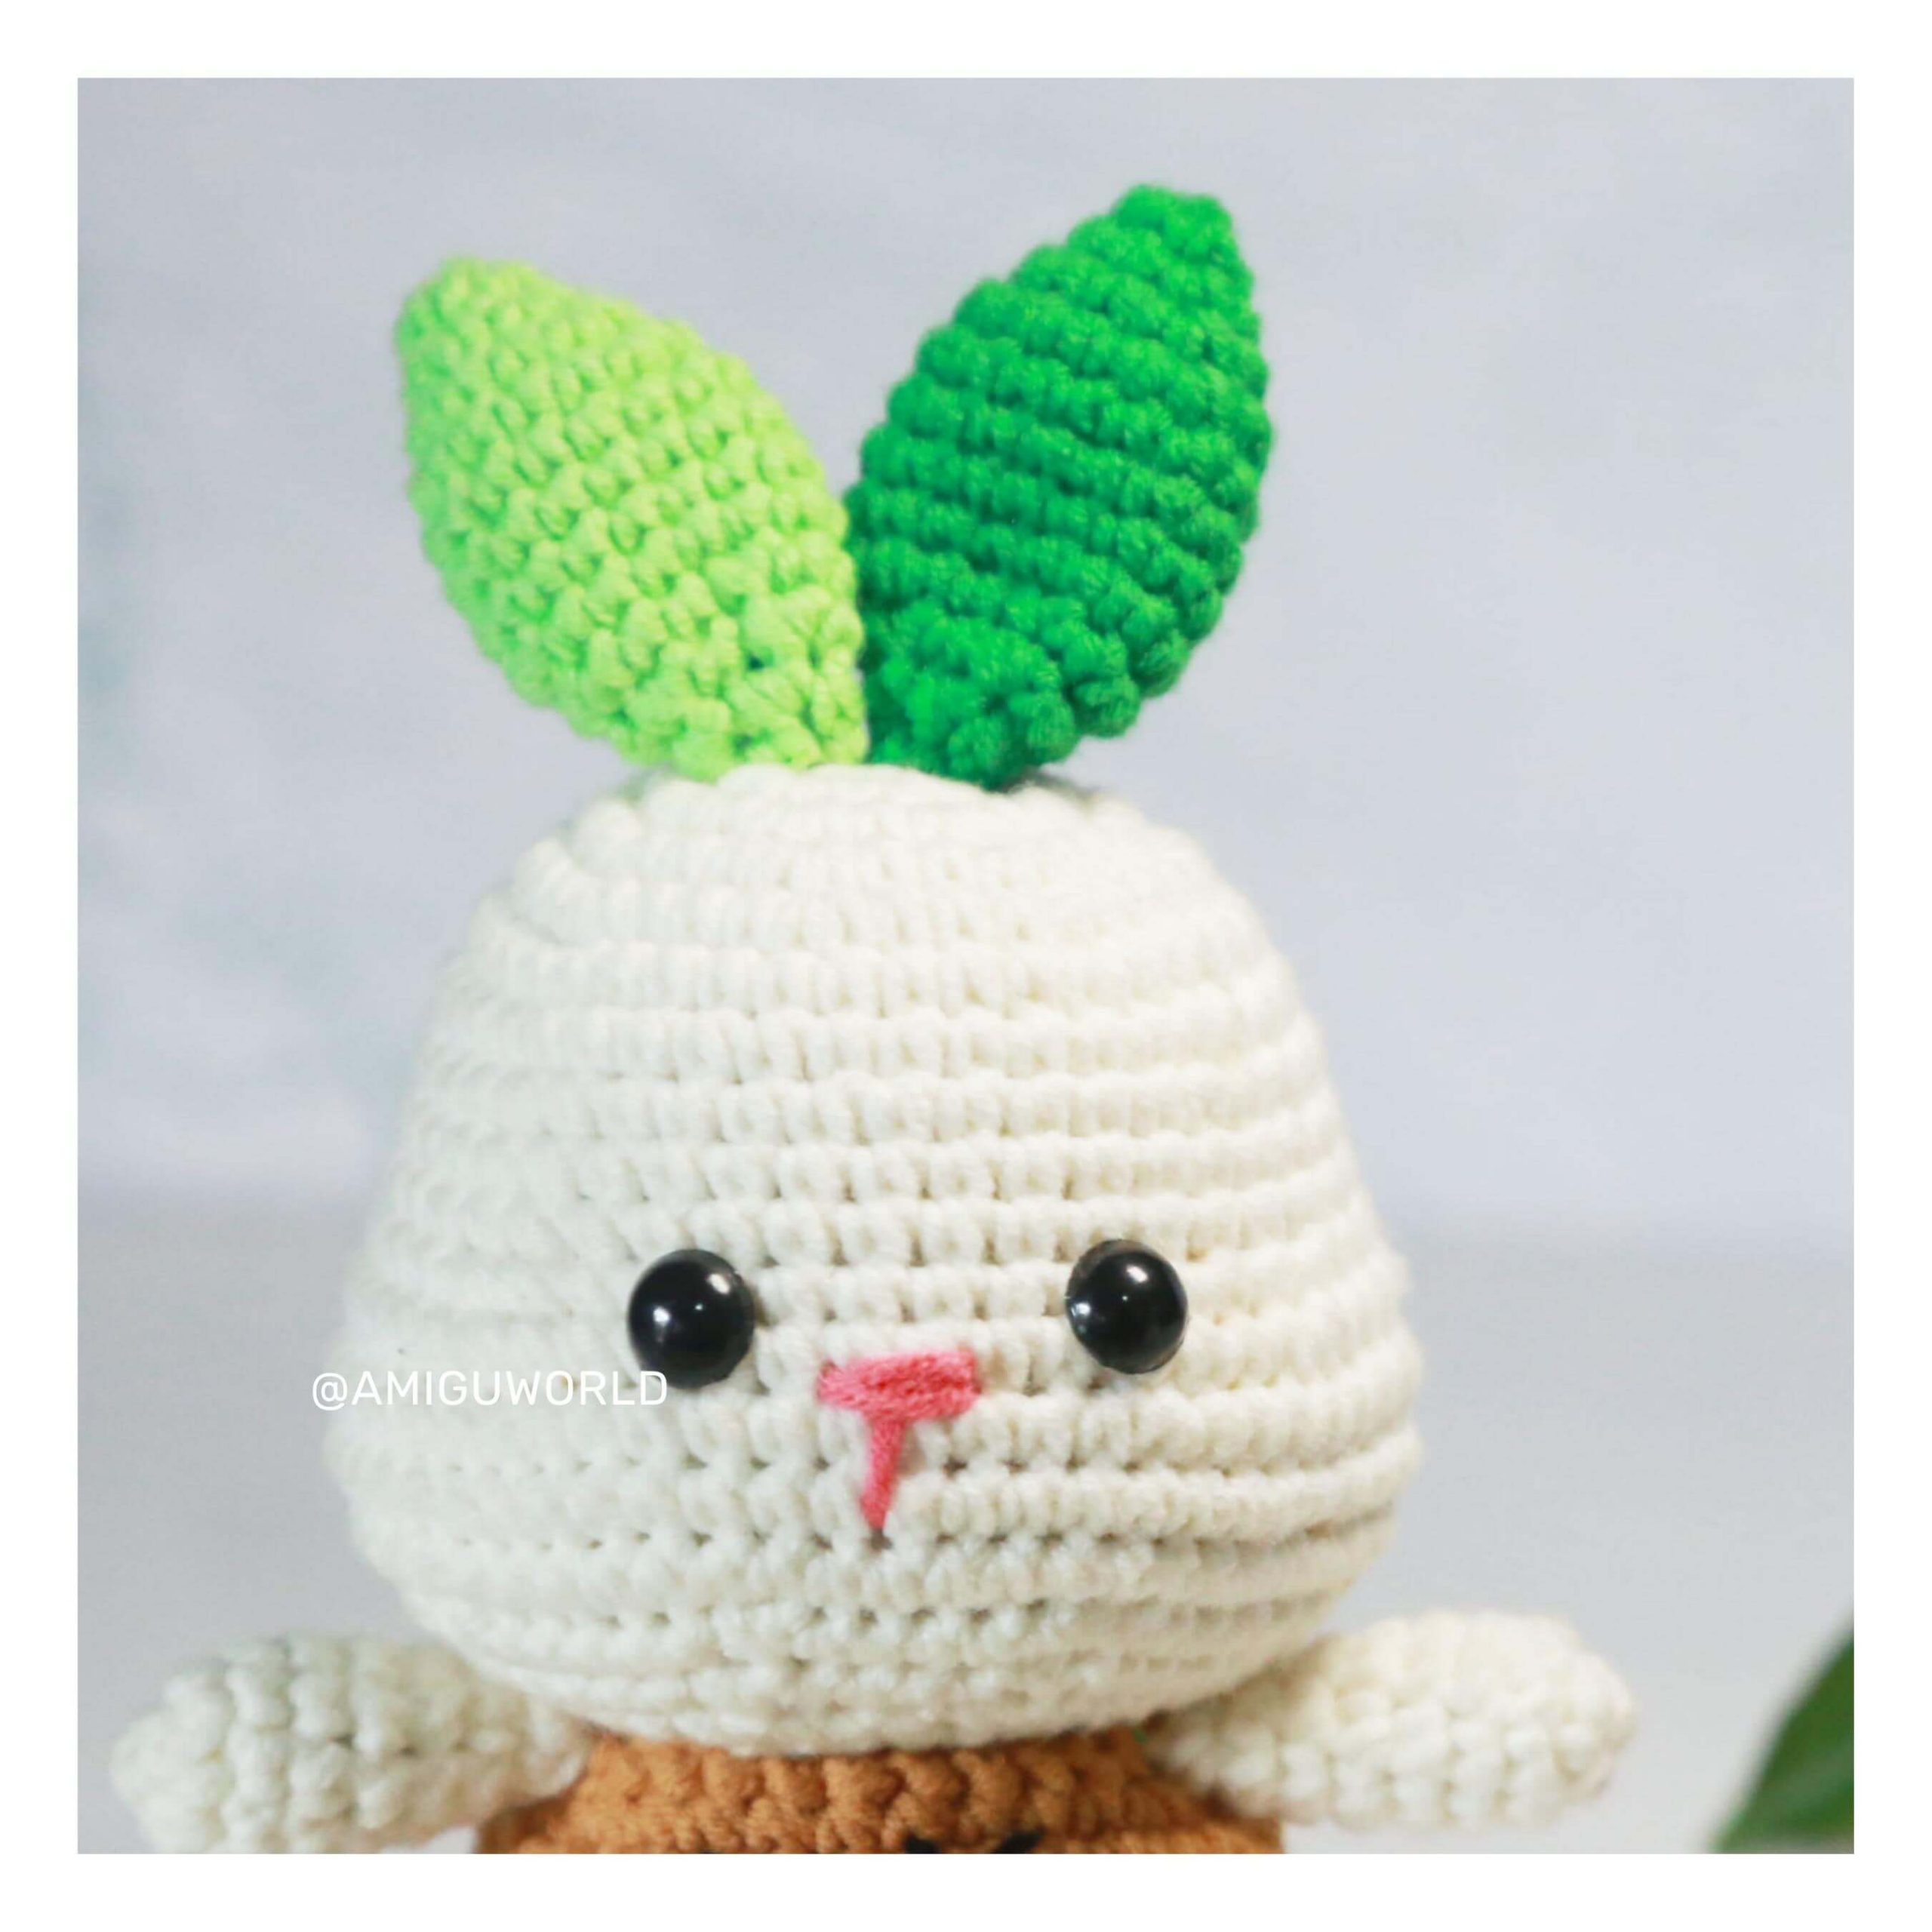 rabbit-amigurumi-crochet-patteren-by-amiguworld (2)